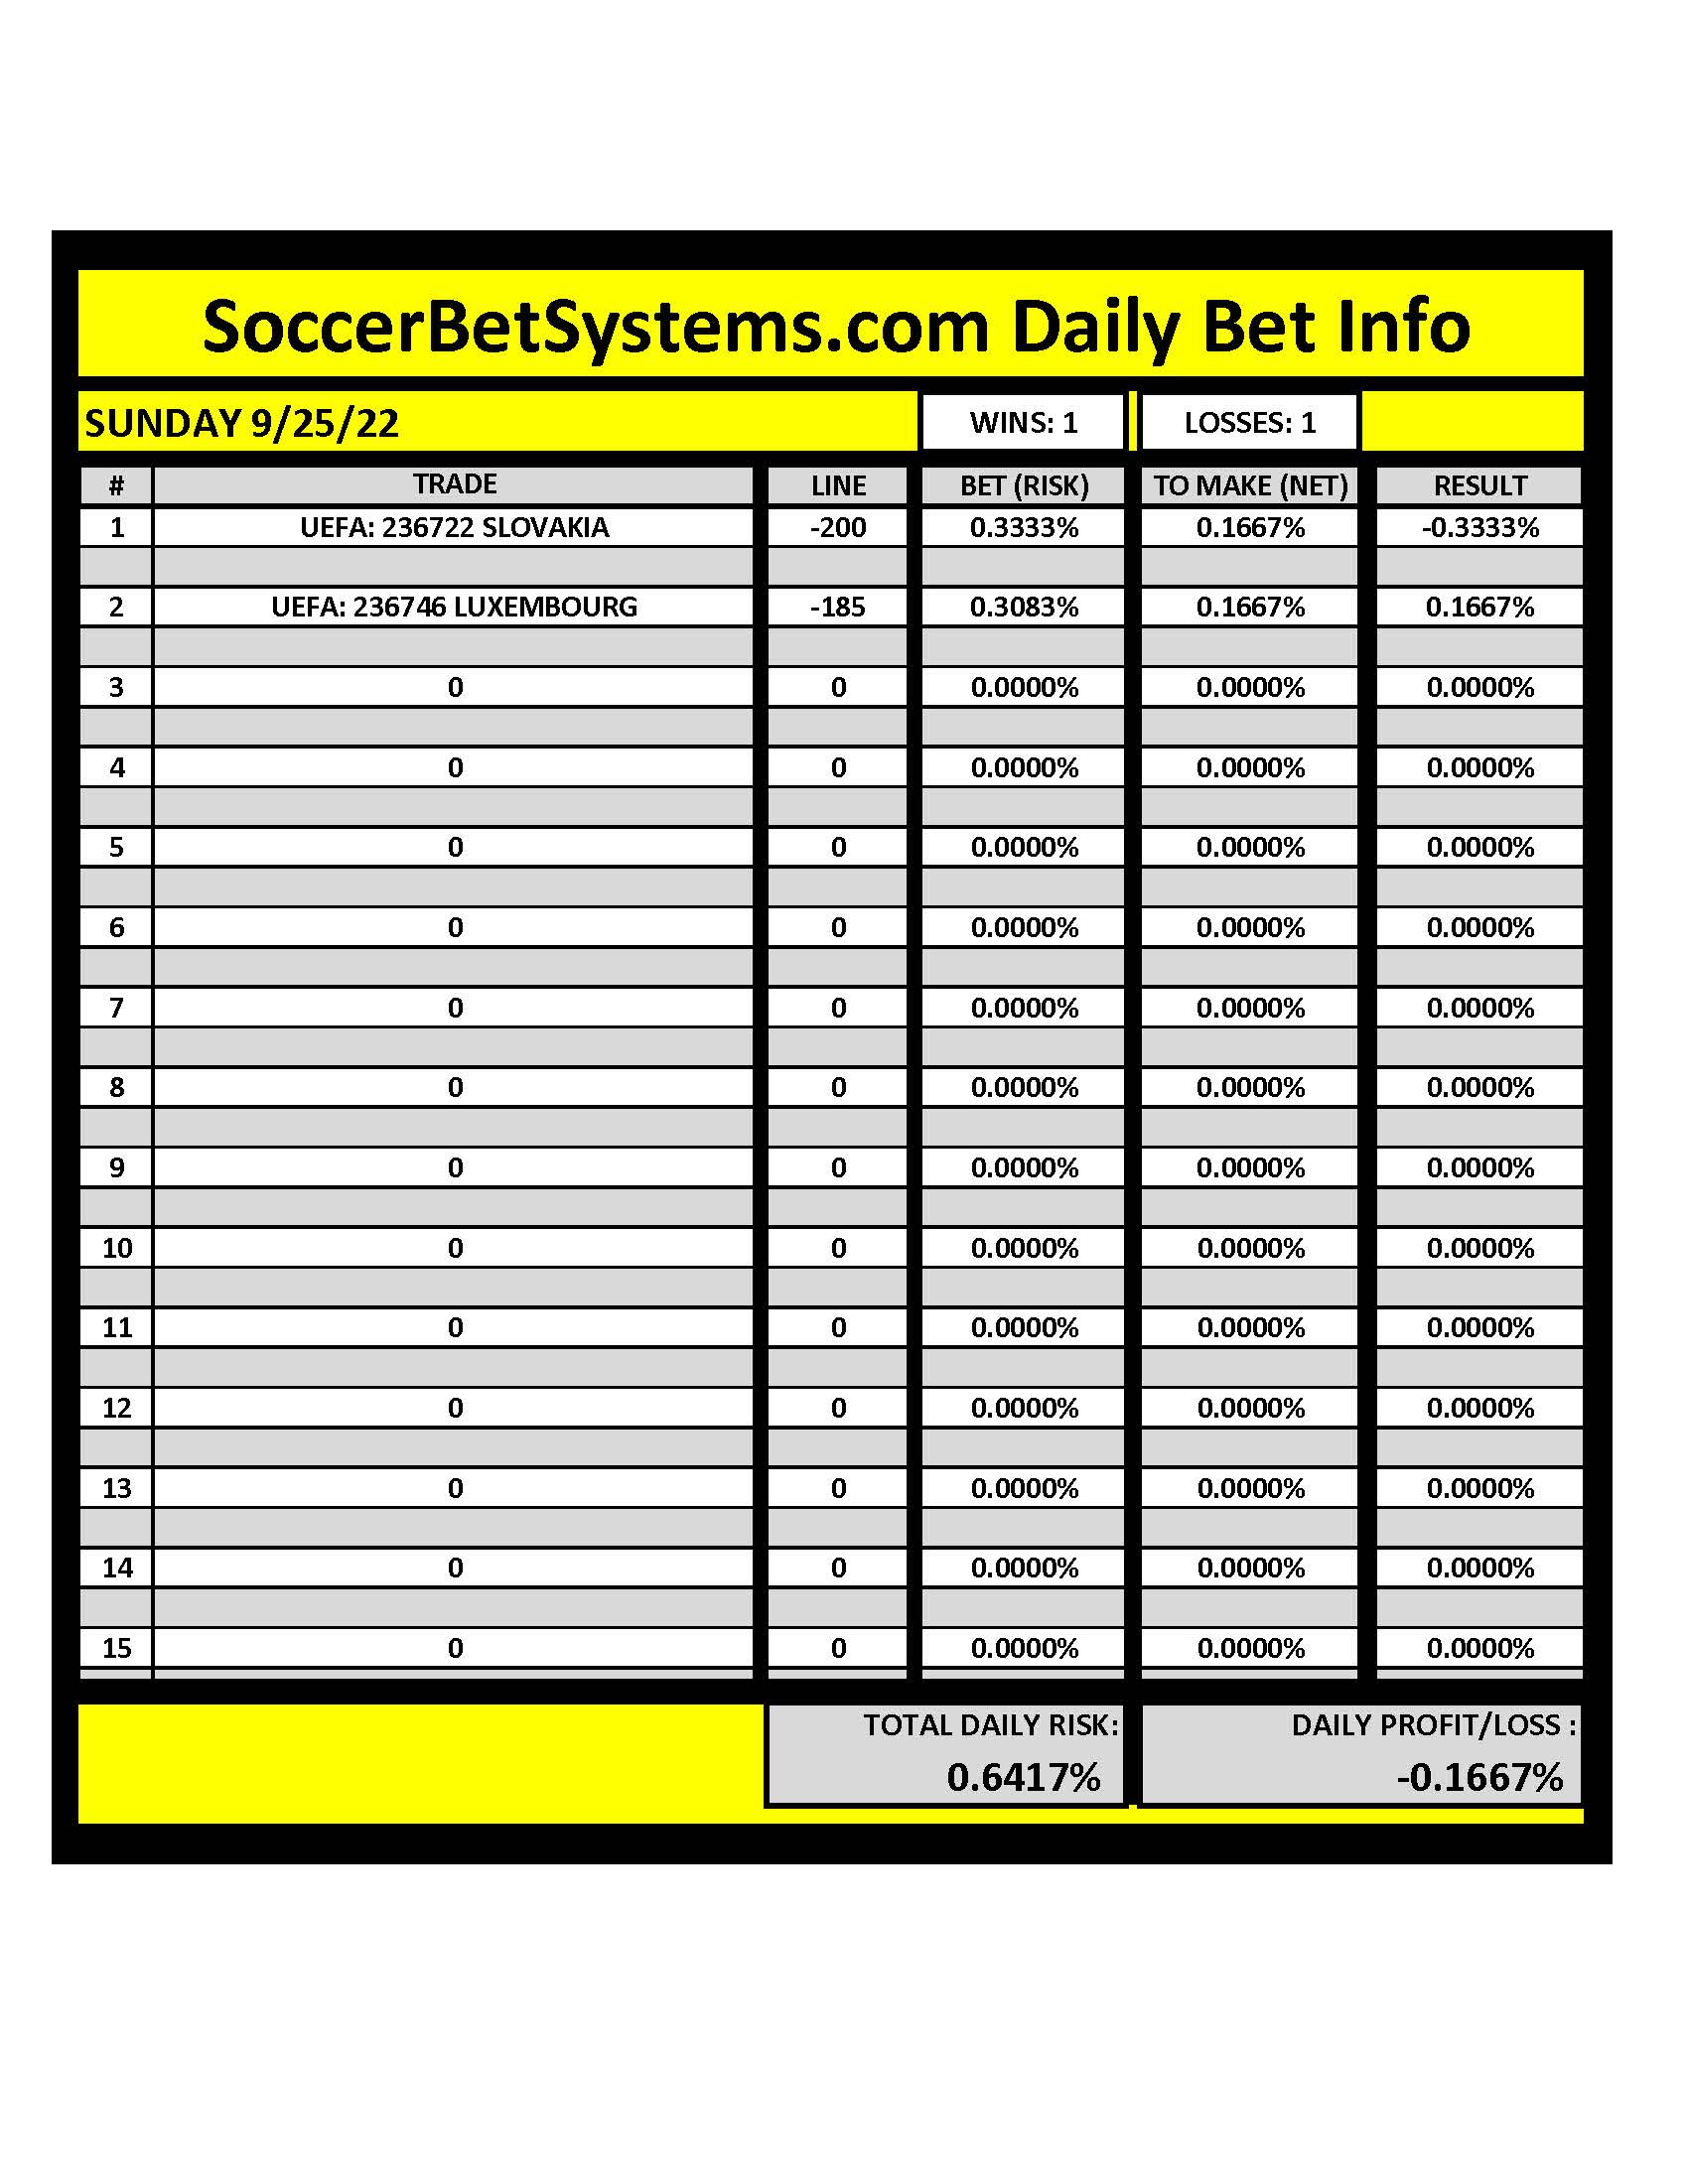 SoccerBetSystems.com 9/25/22 Daily Results